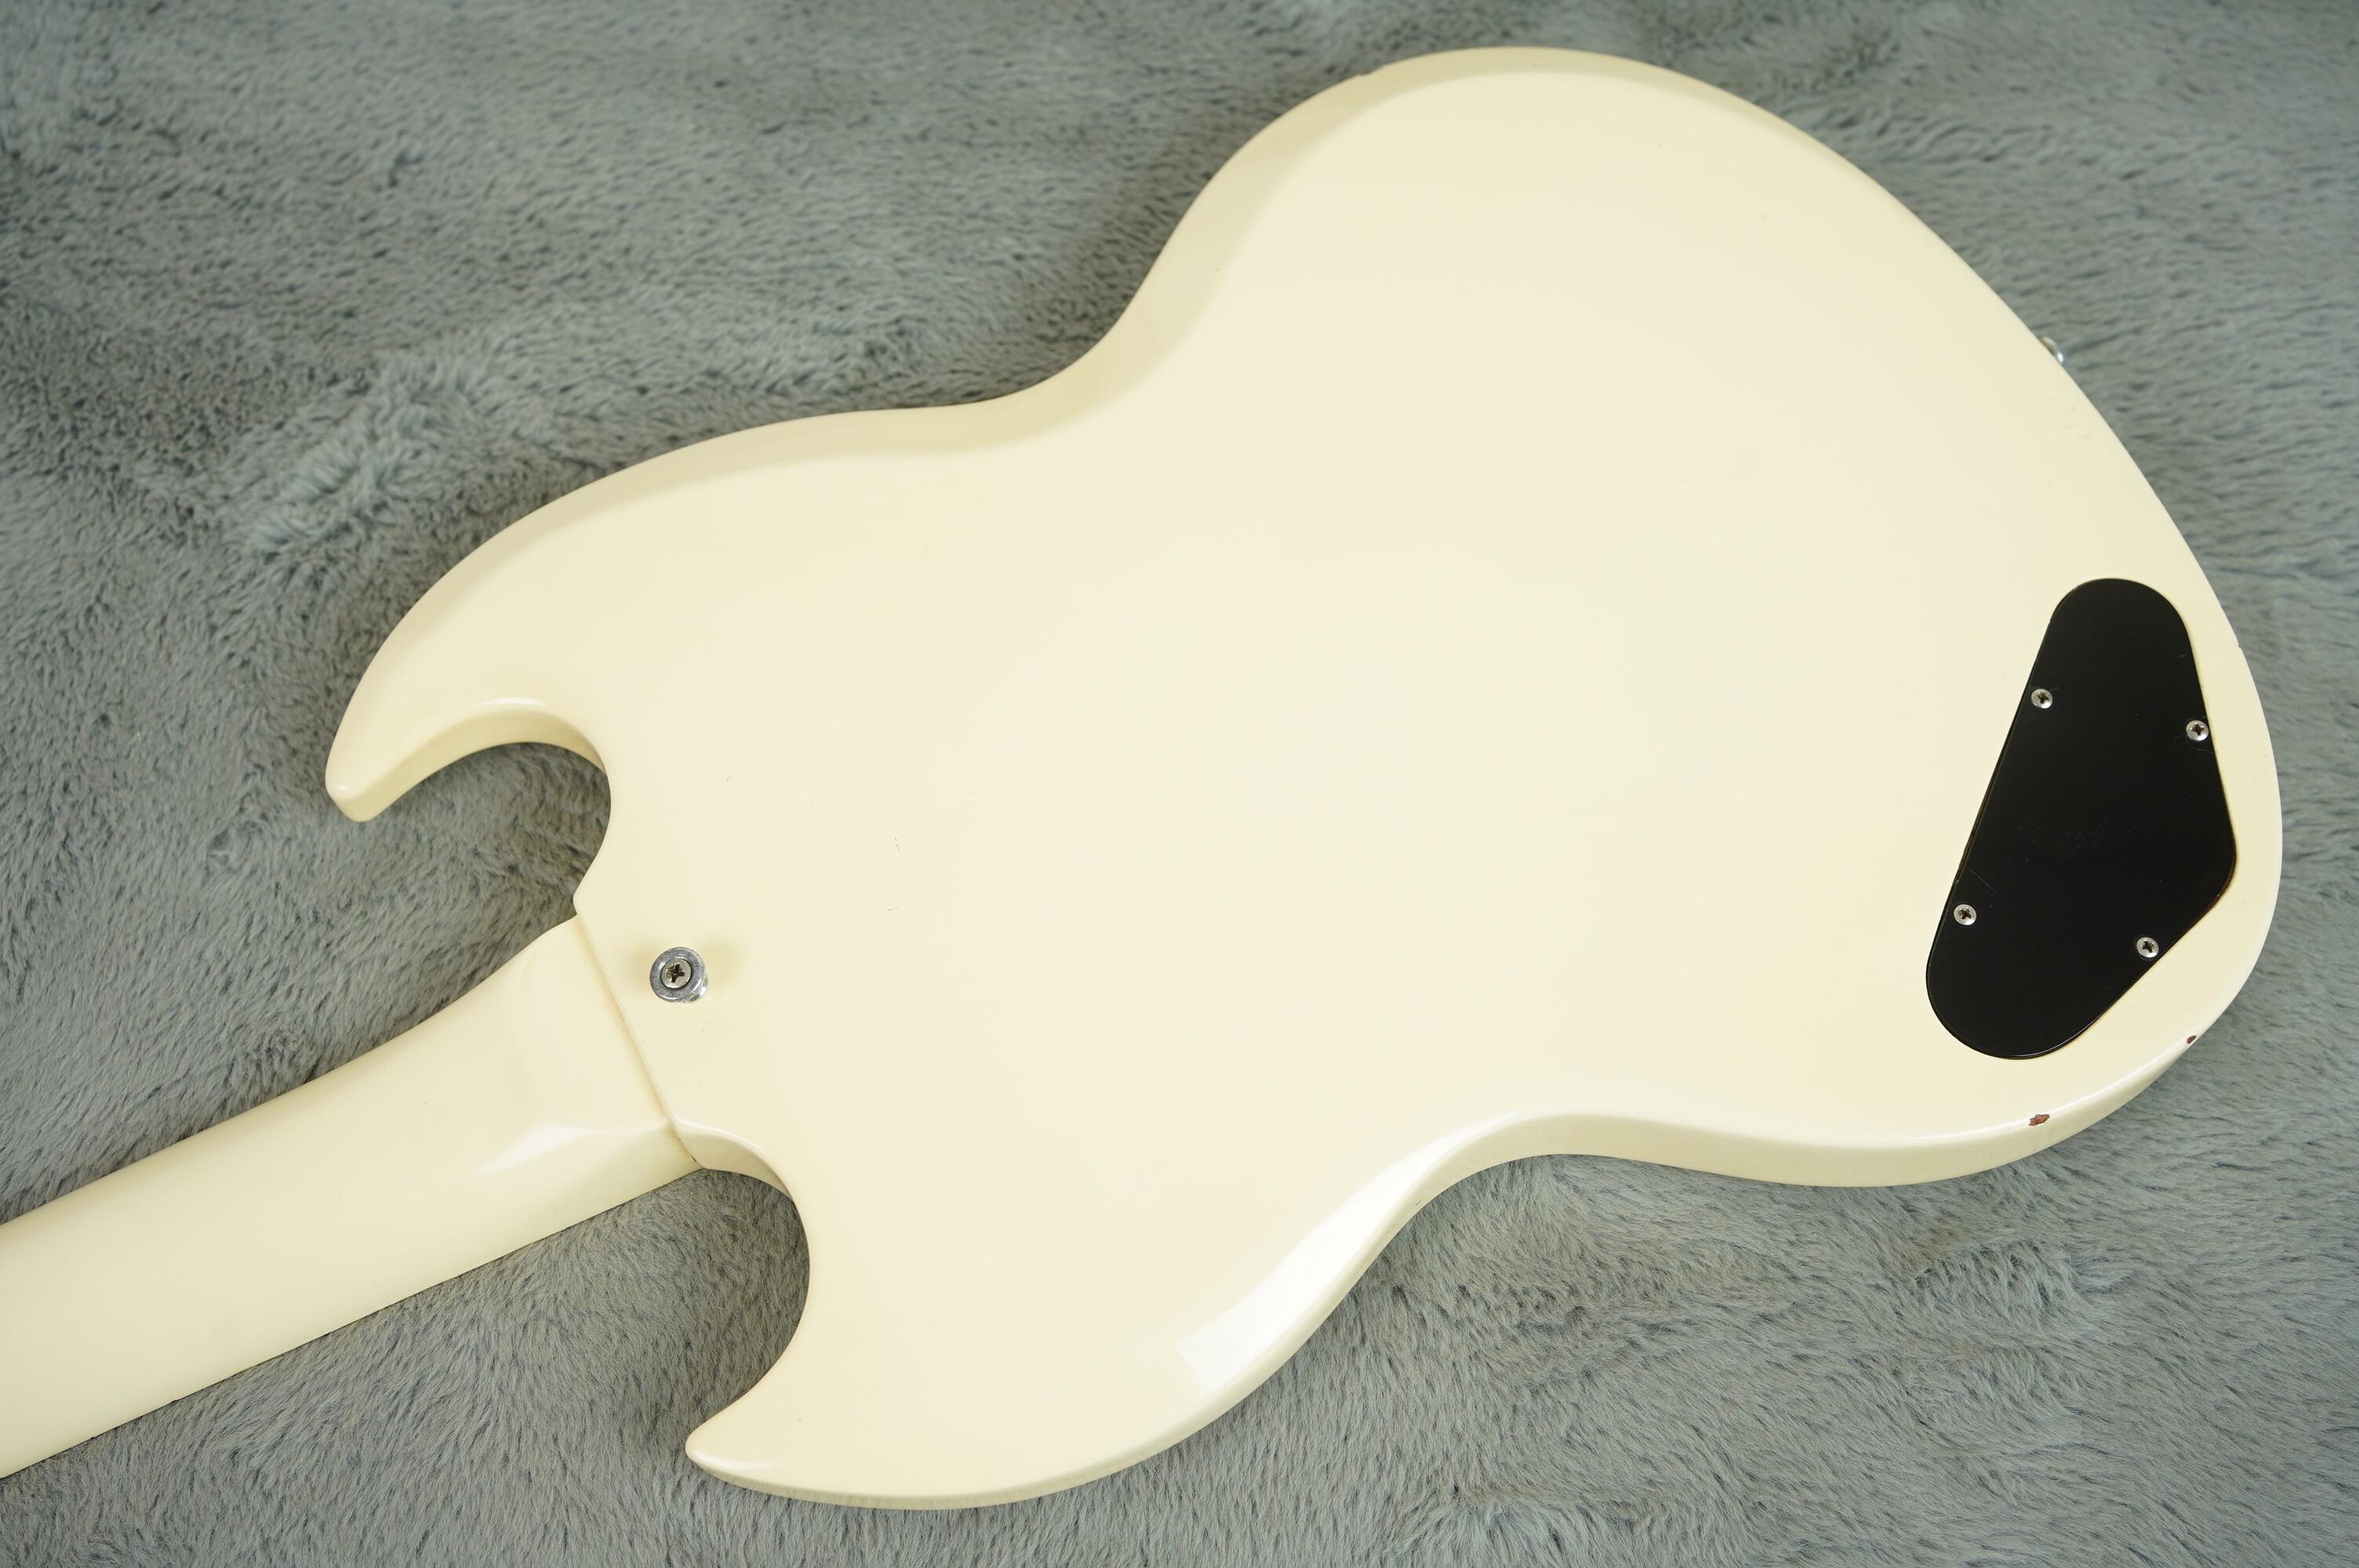 1965 Gibson SG junior Polaris White 64 spec